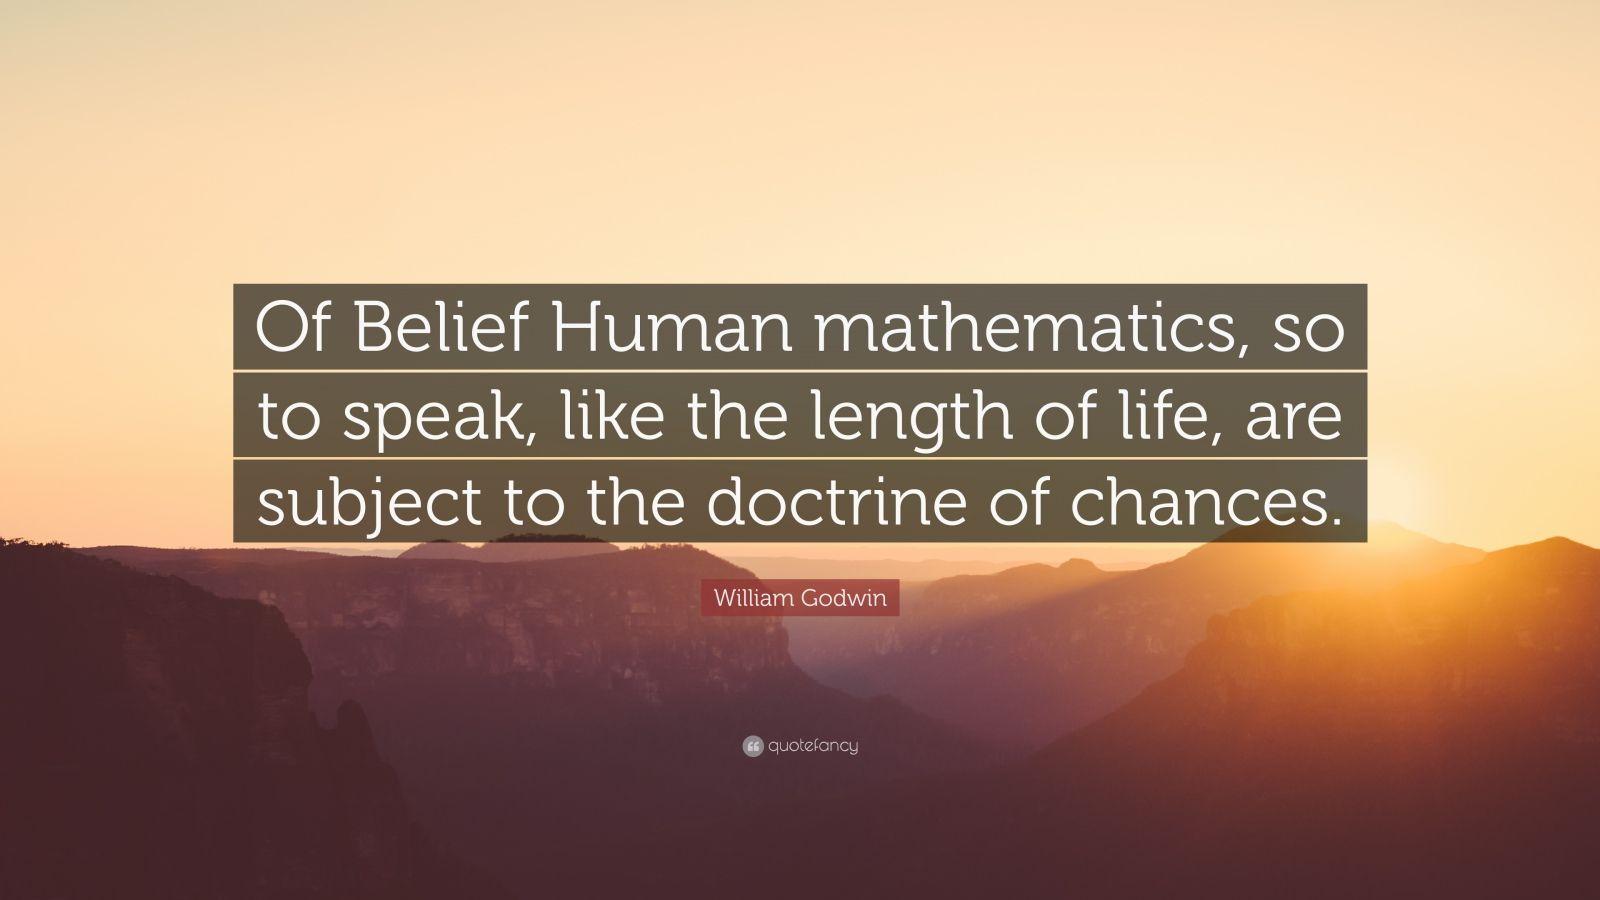 William Godwin Quote: “Of Belief Human mathematics, so to speak